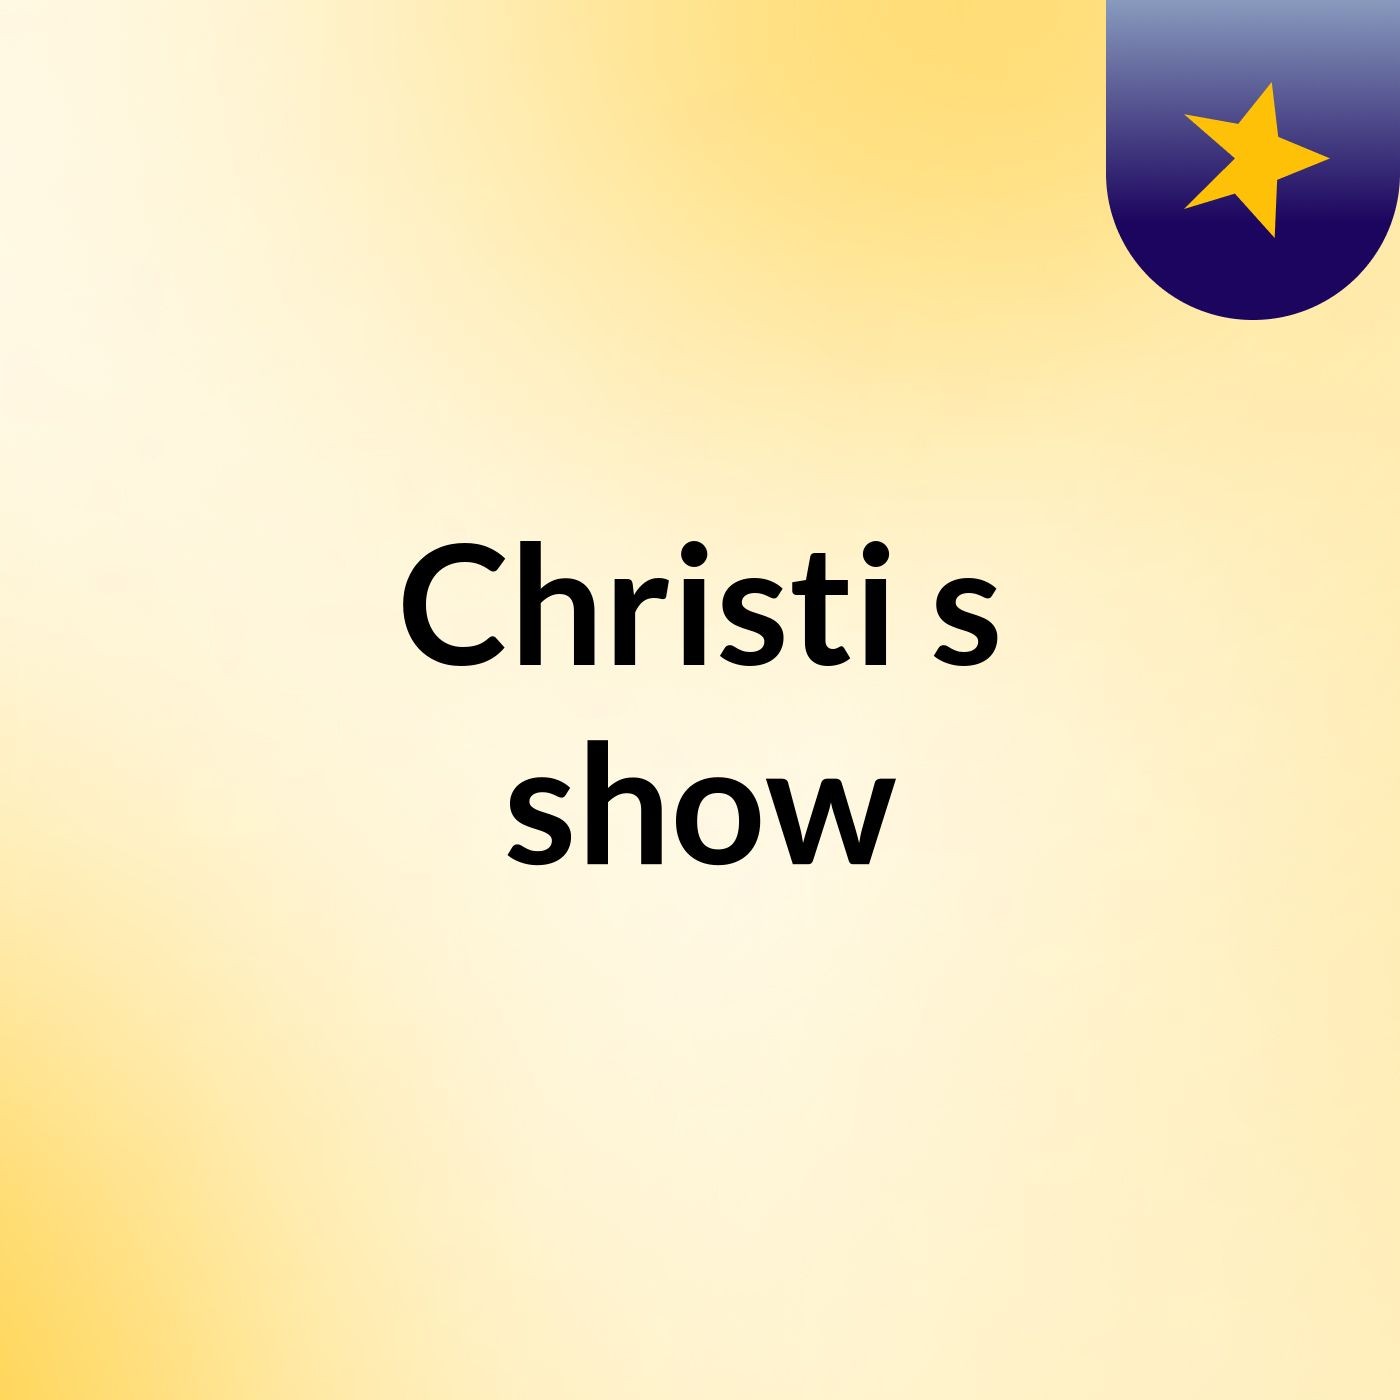 Christi's show